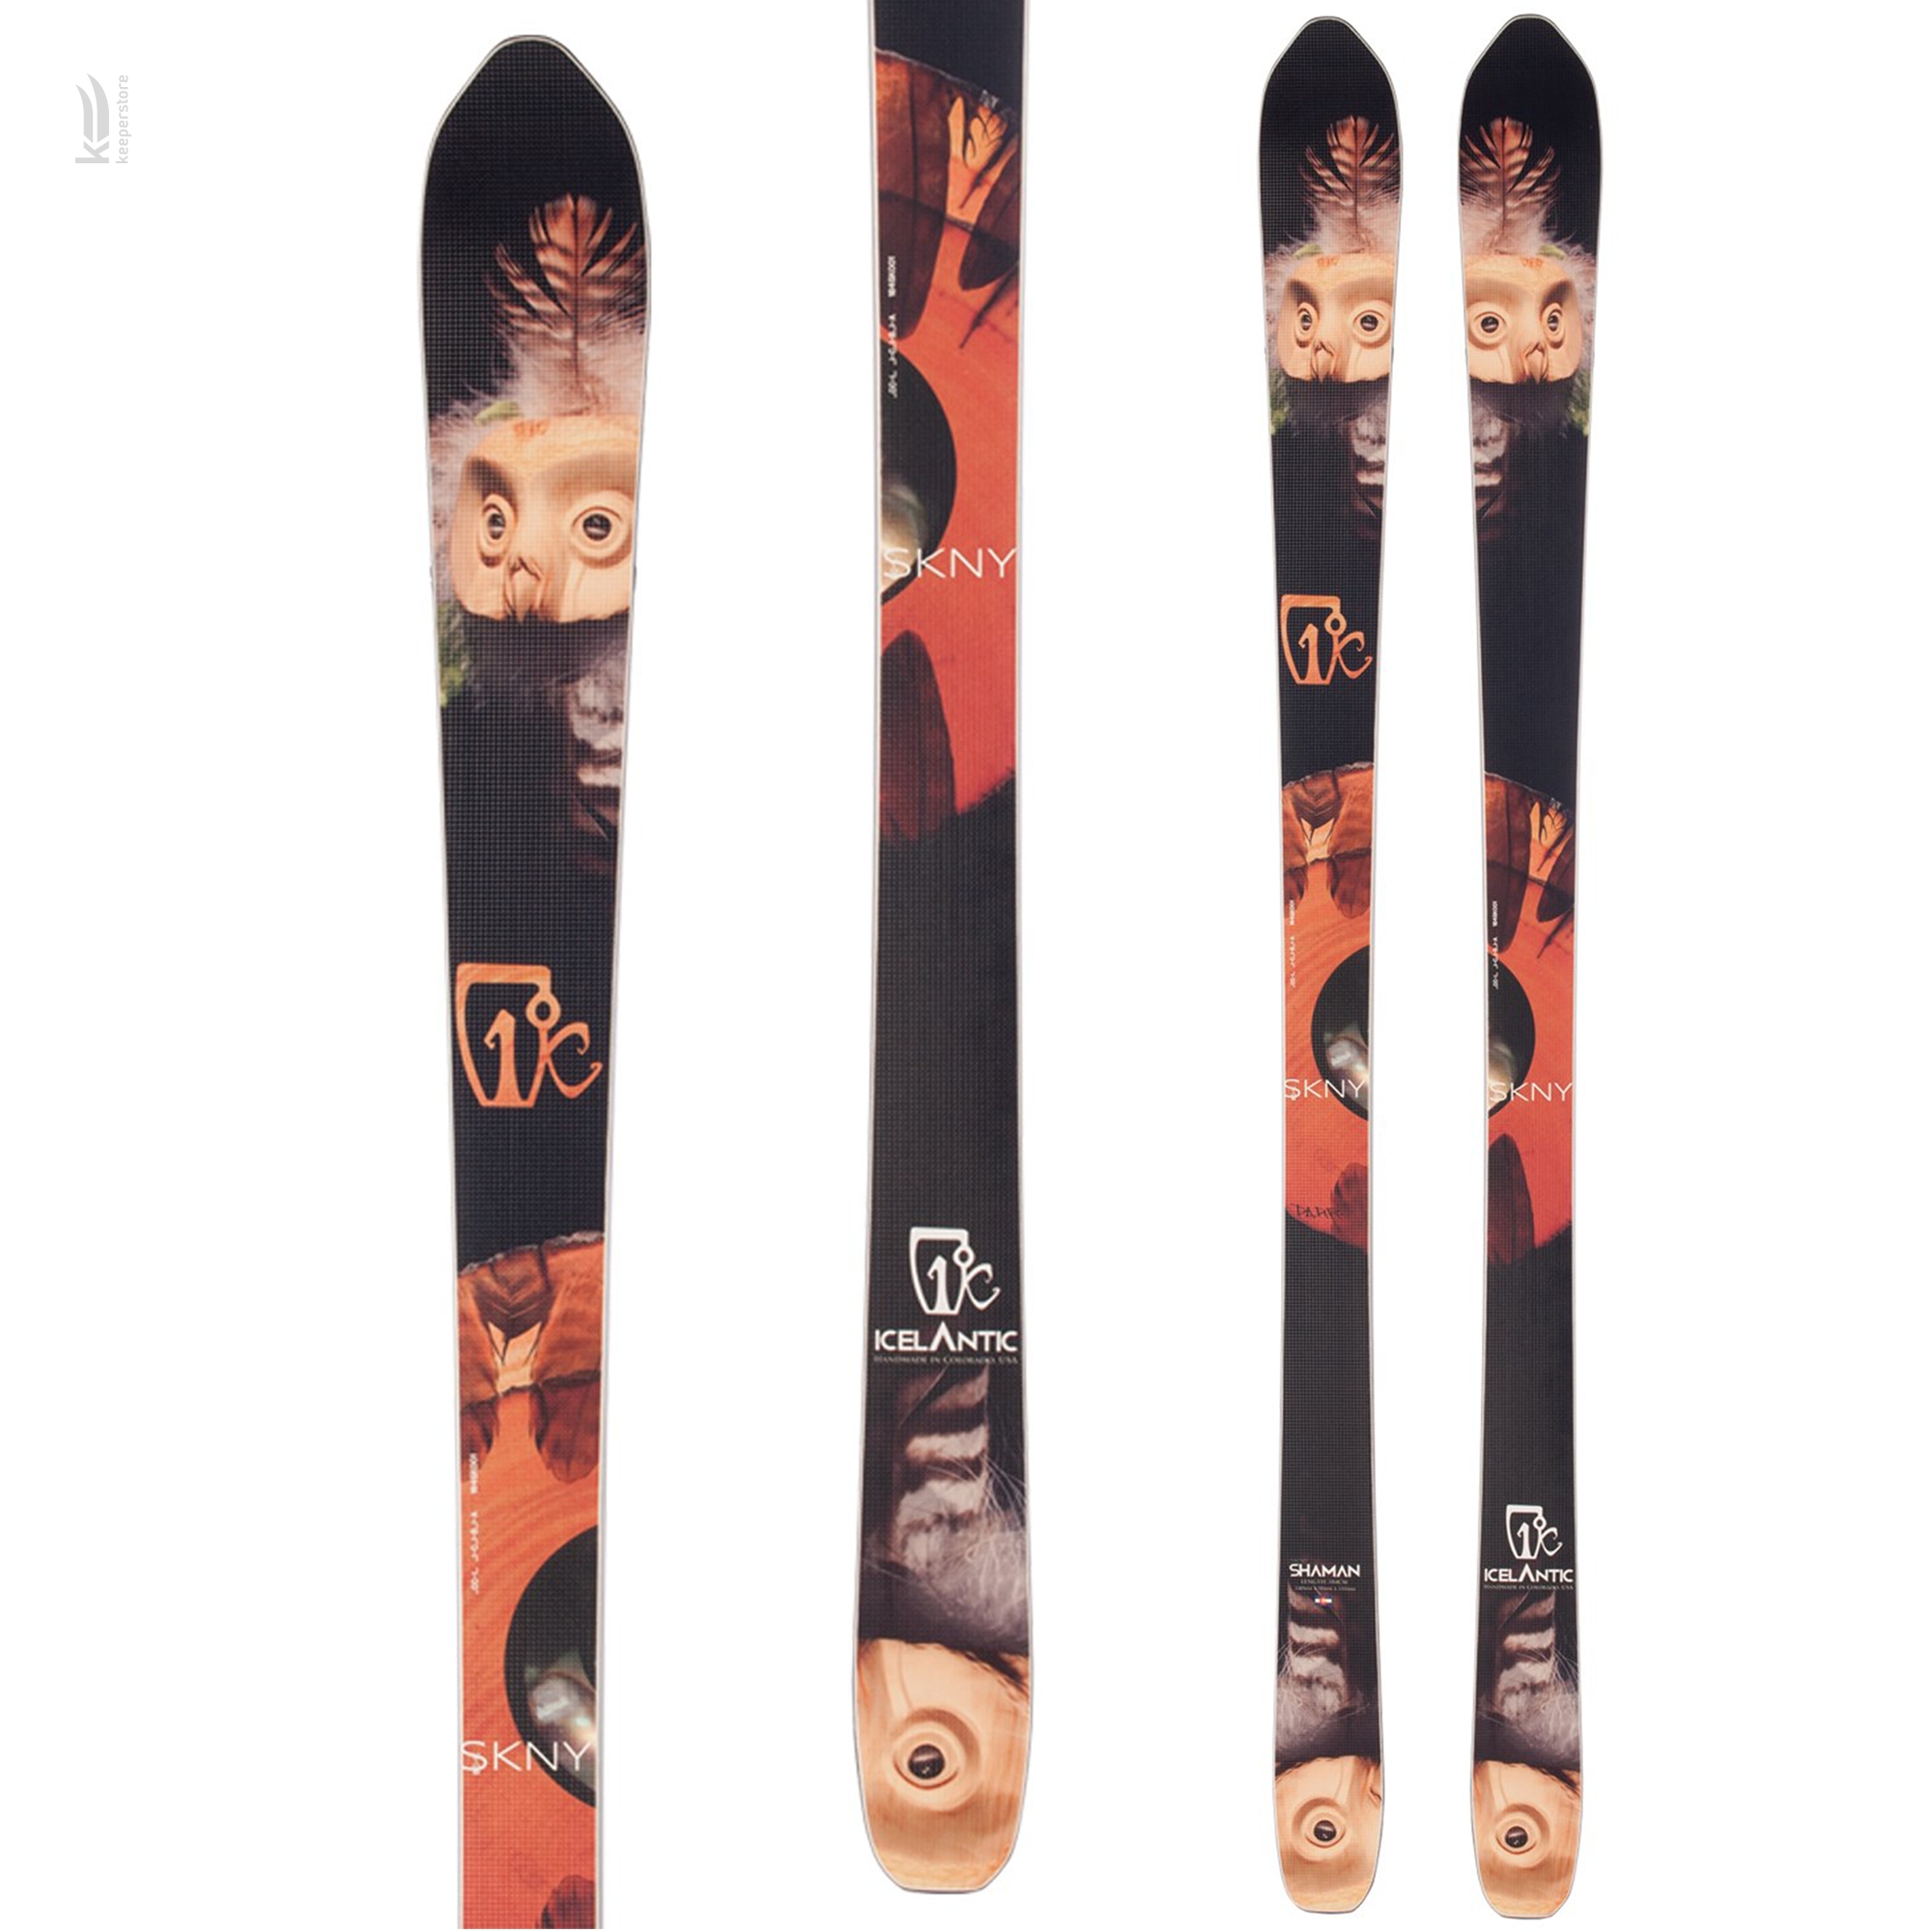 Лыжи для карвинга Icelantic Shaman SKNY 2013/2014 173cm